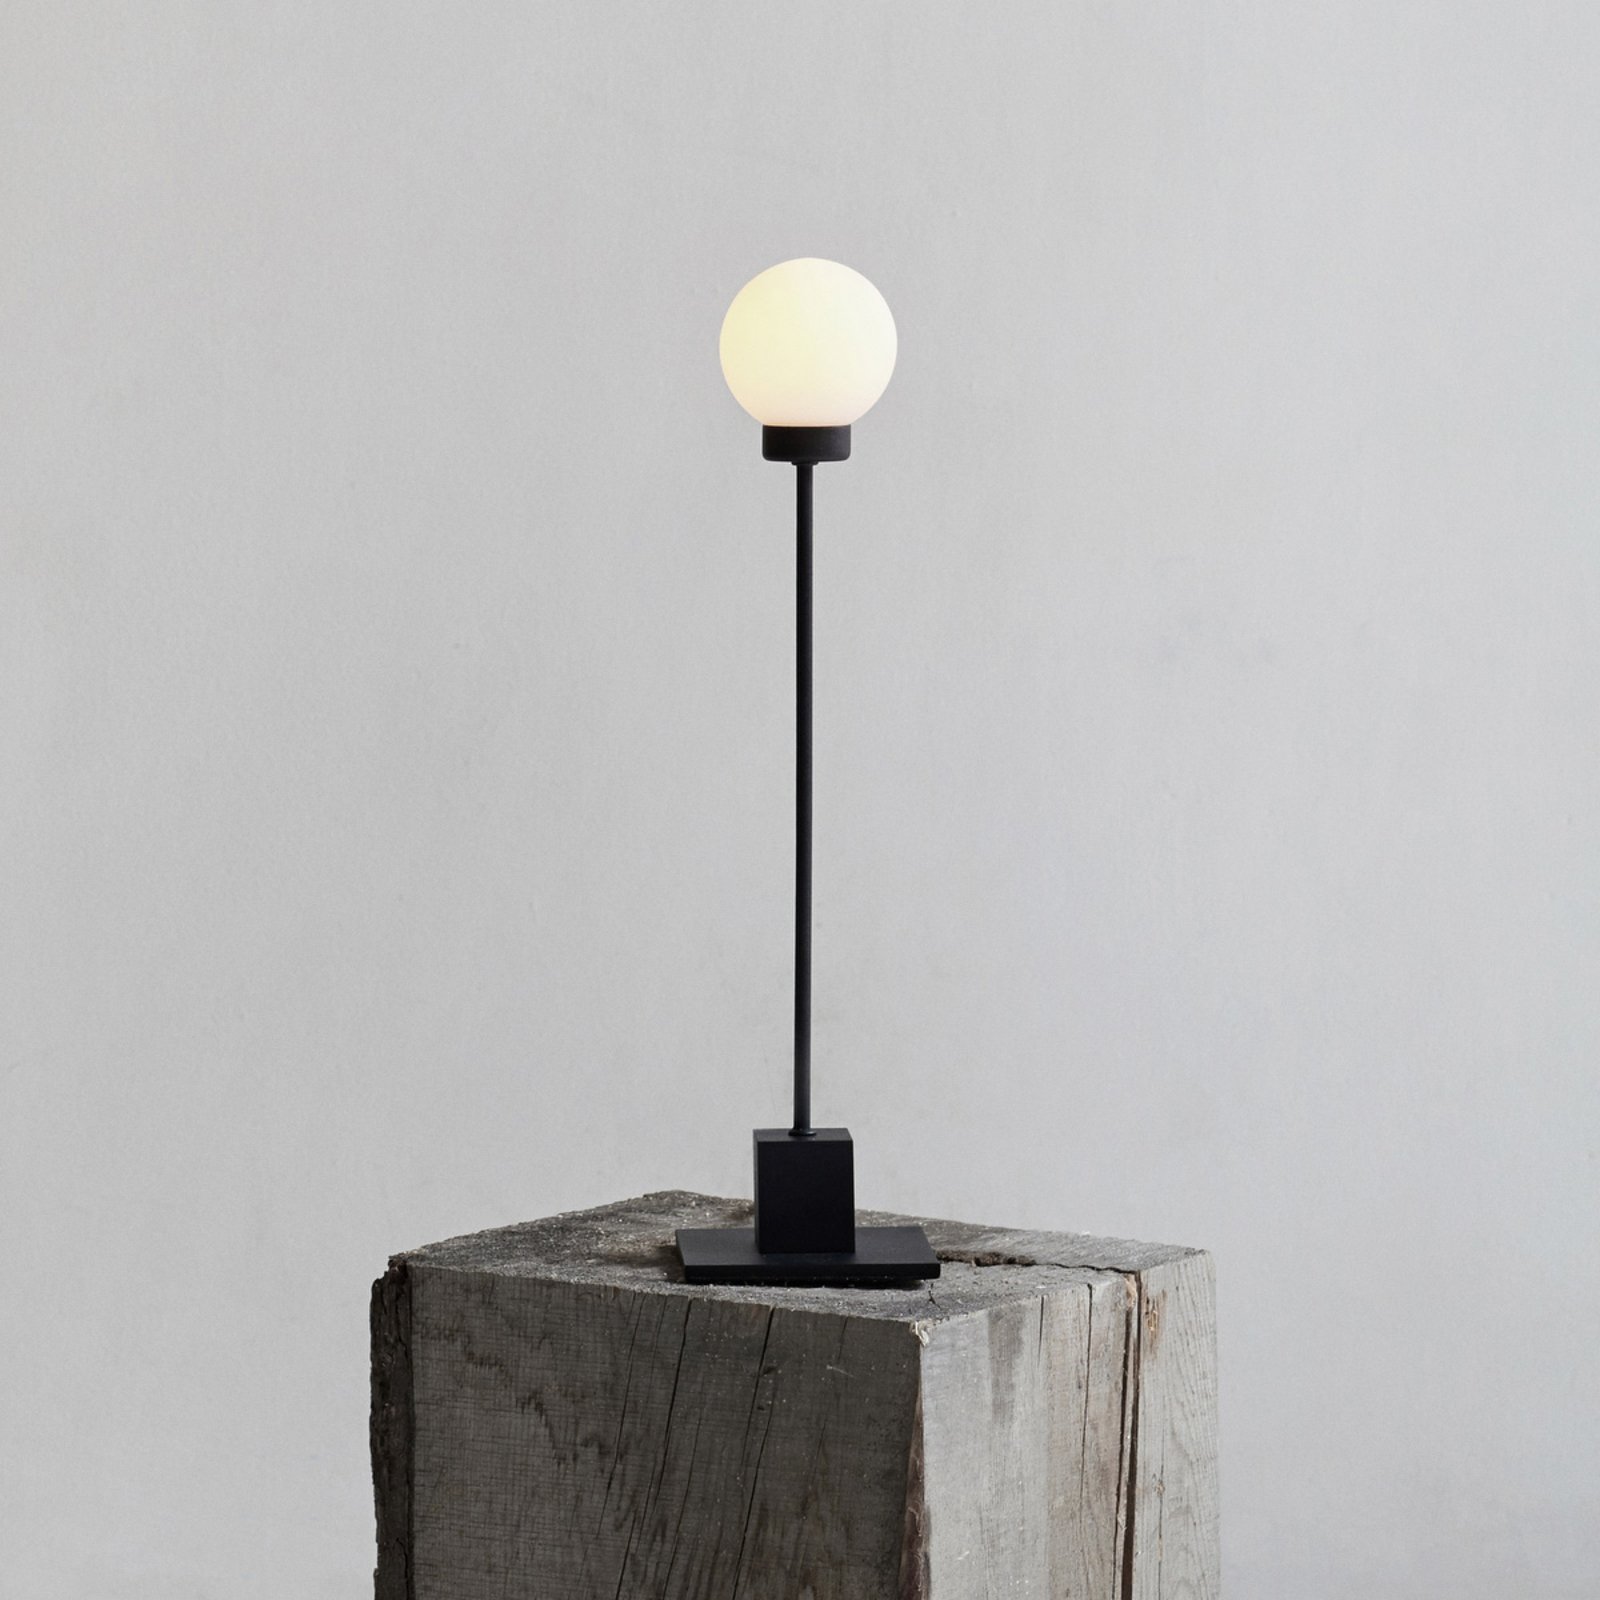 Northern table lamp Snowball, black